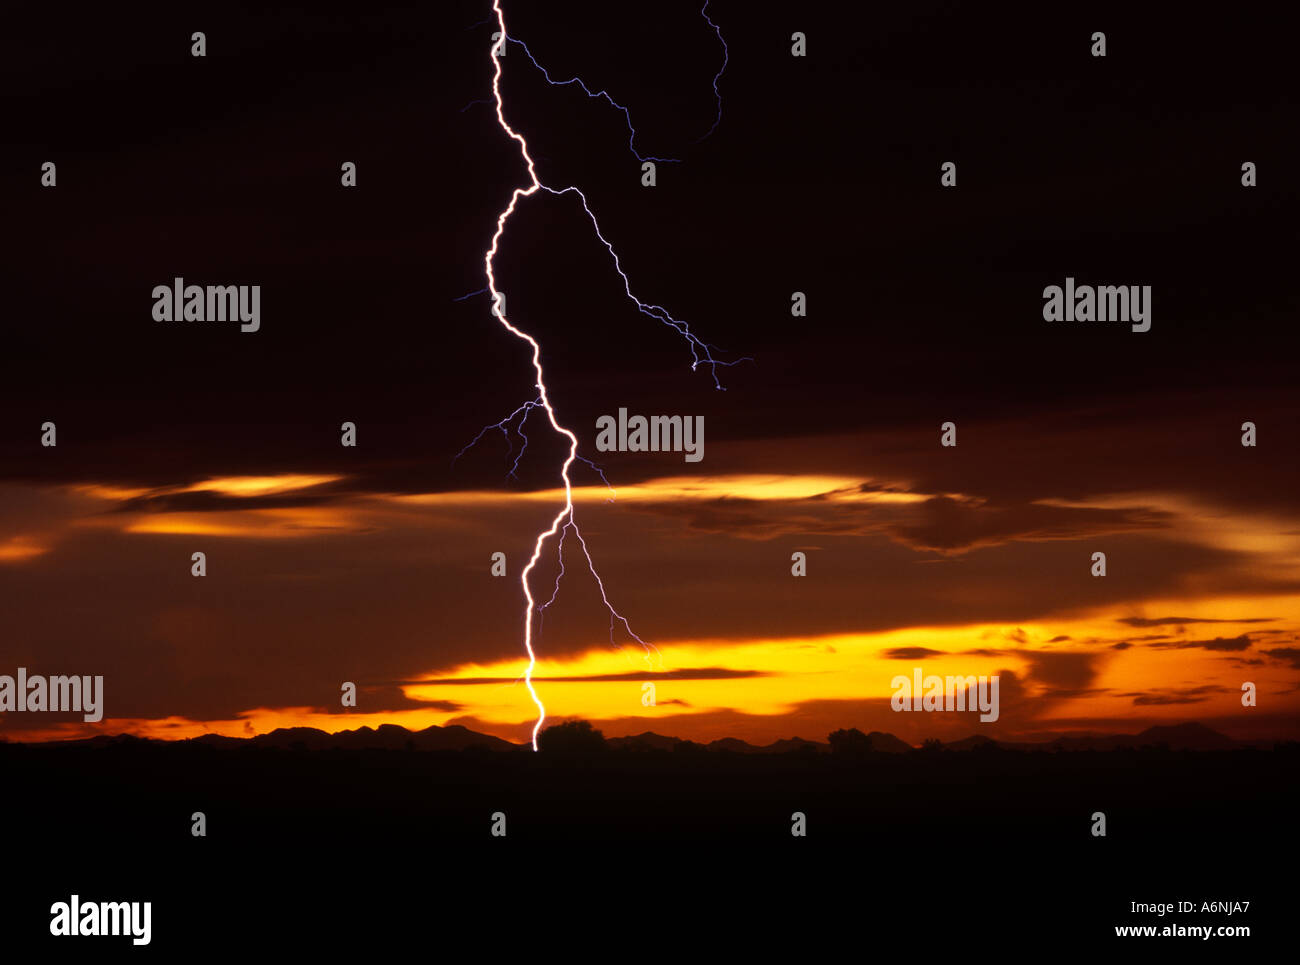 Lightning strikes dramatically against a yellow and orange sunset sky in Marana, Arizona, US. Stock Photo